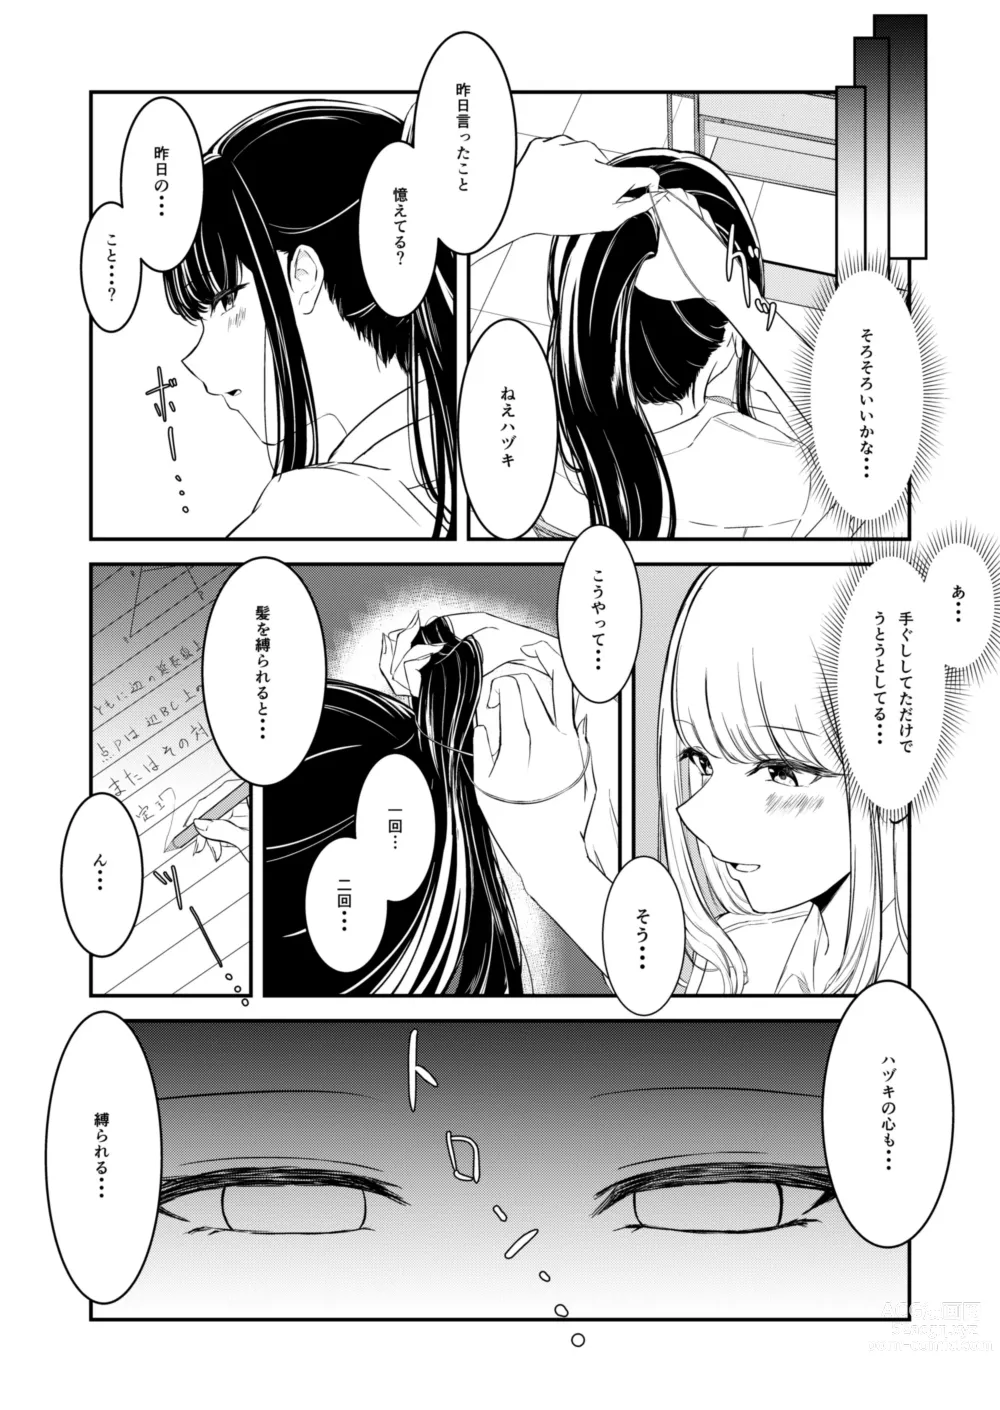 Page 9 of doujinshi Yuri comic Part 1,2 and 3.